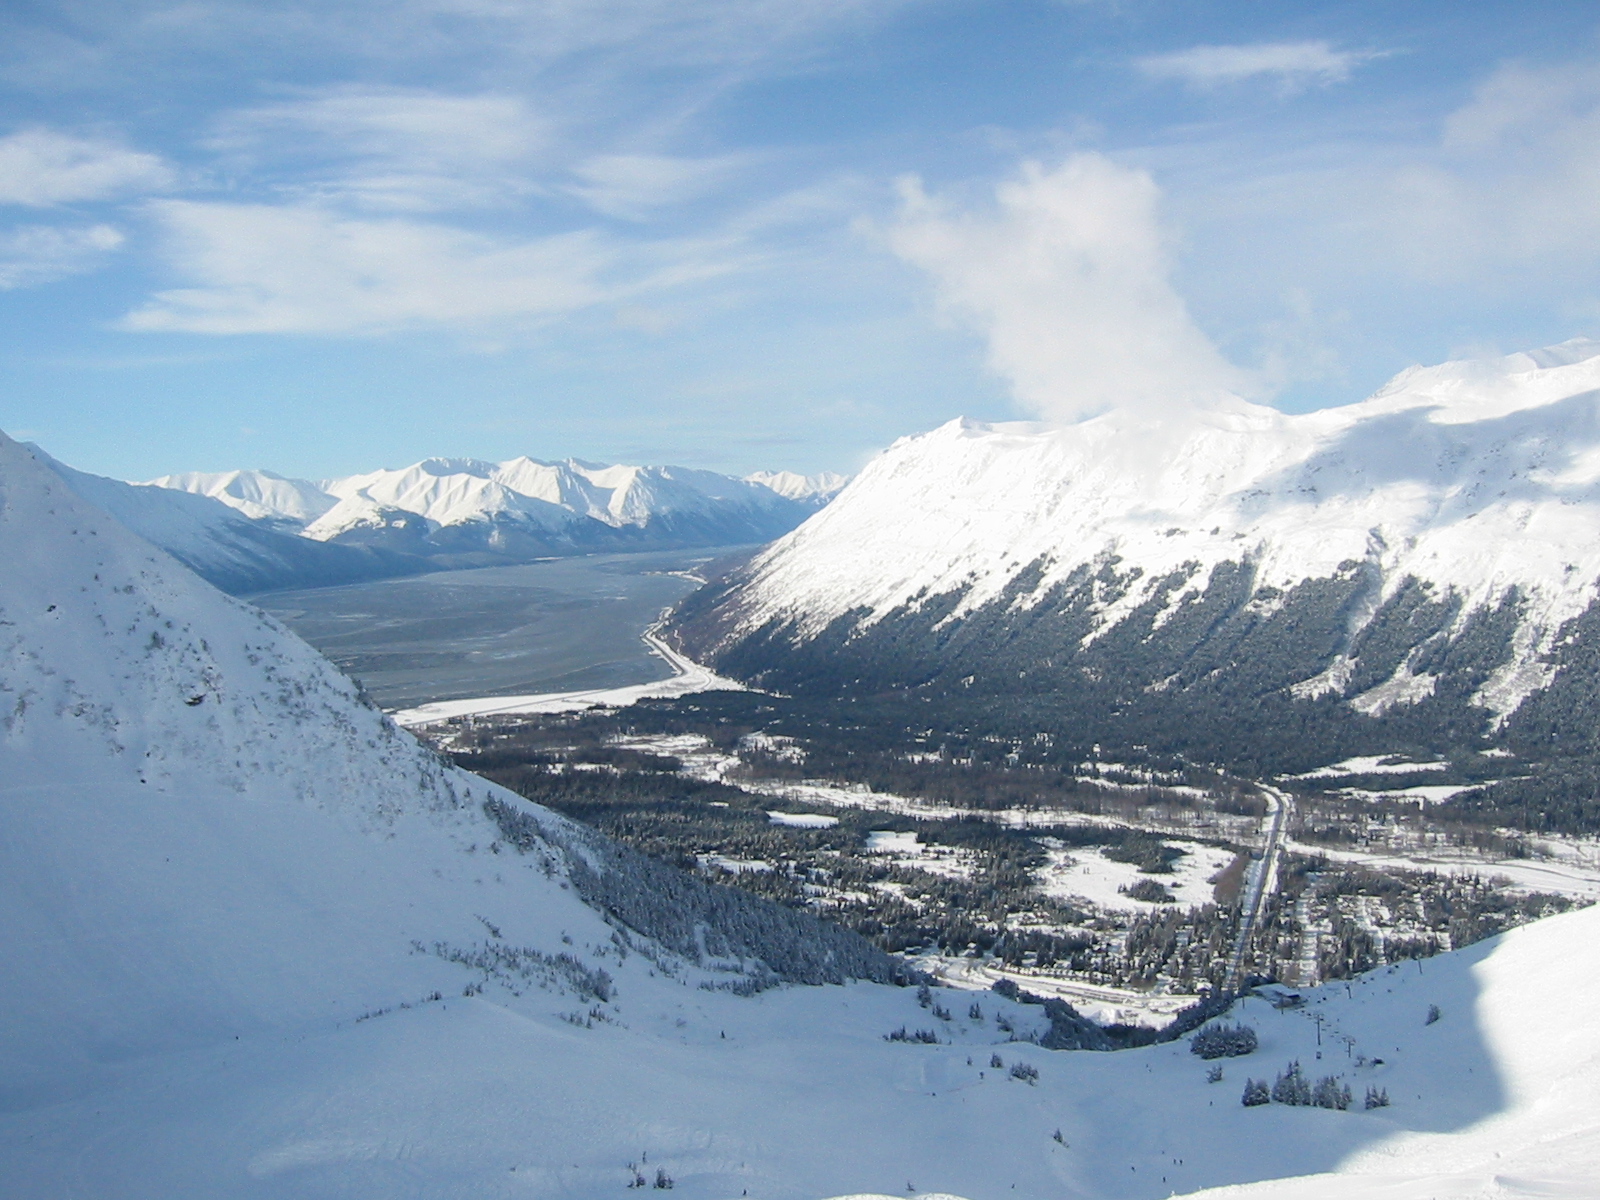 View of the Girdwood Valley in Alaska